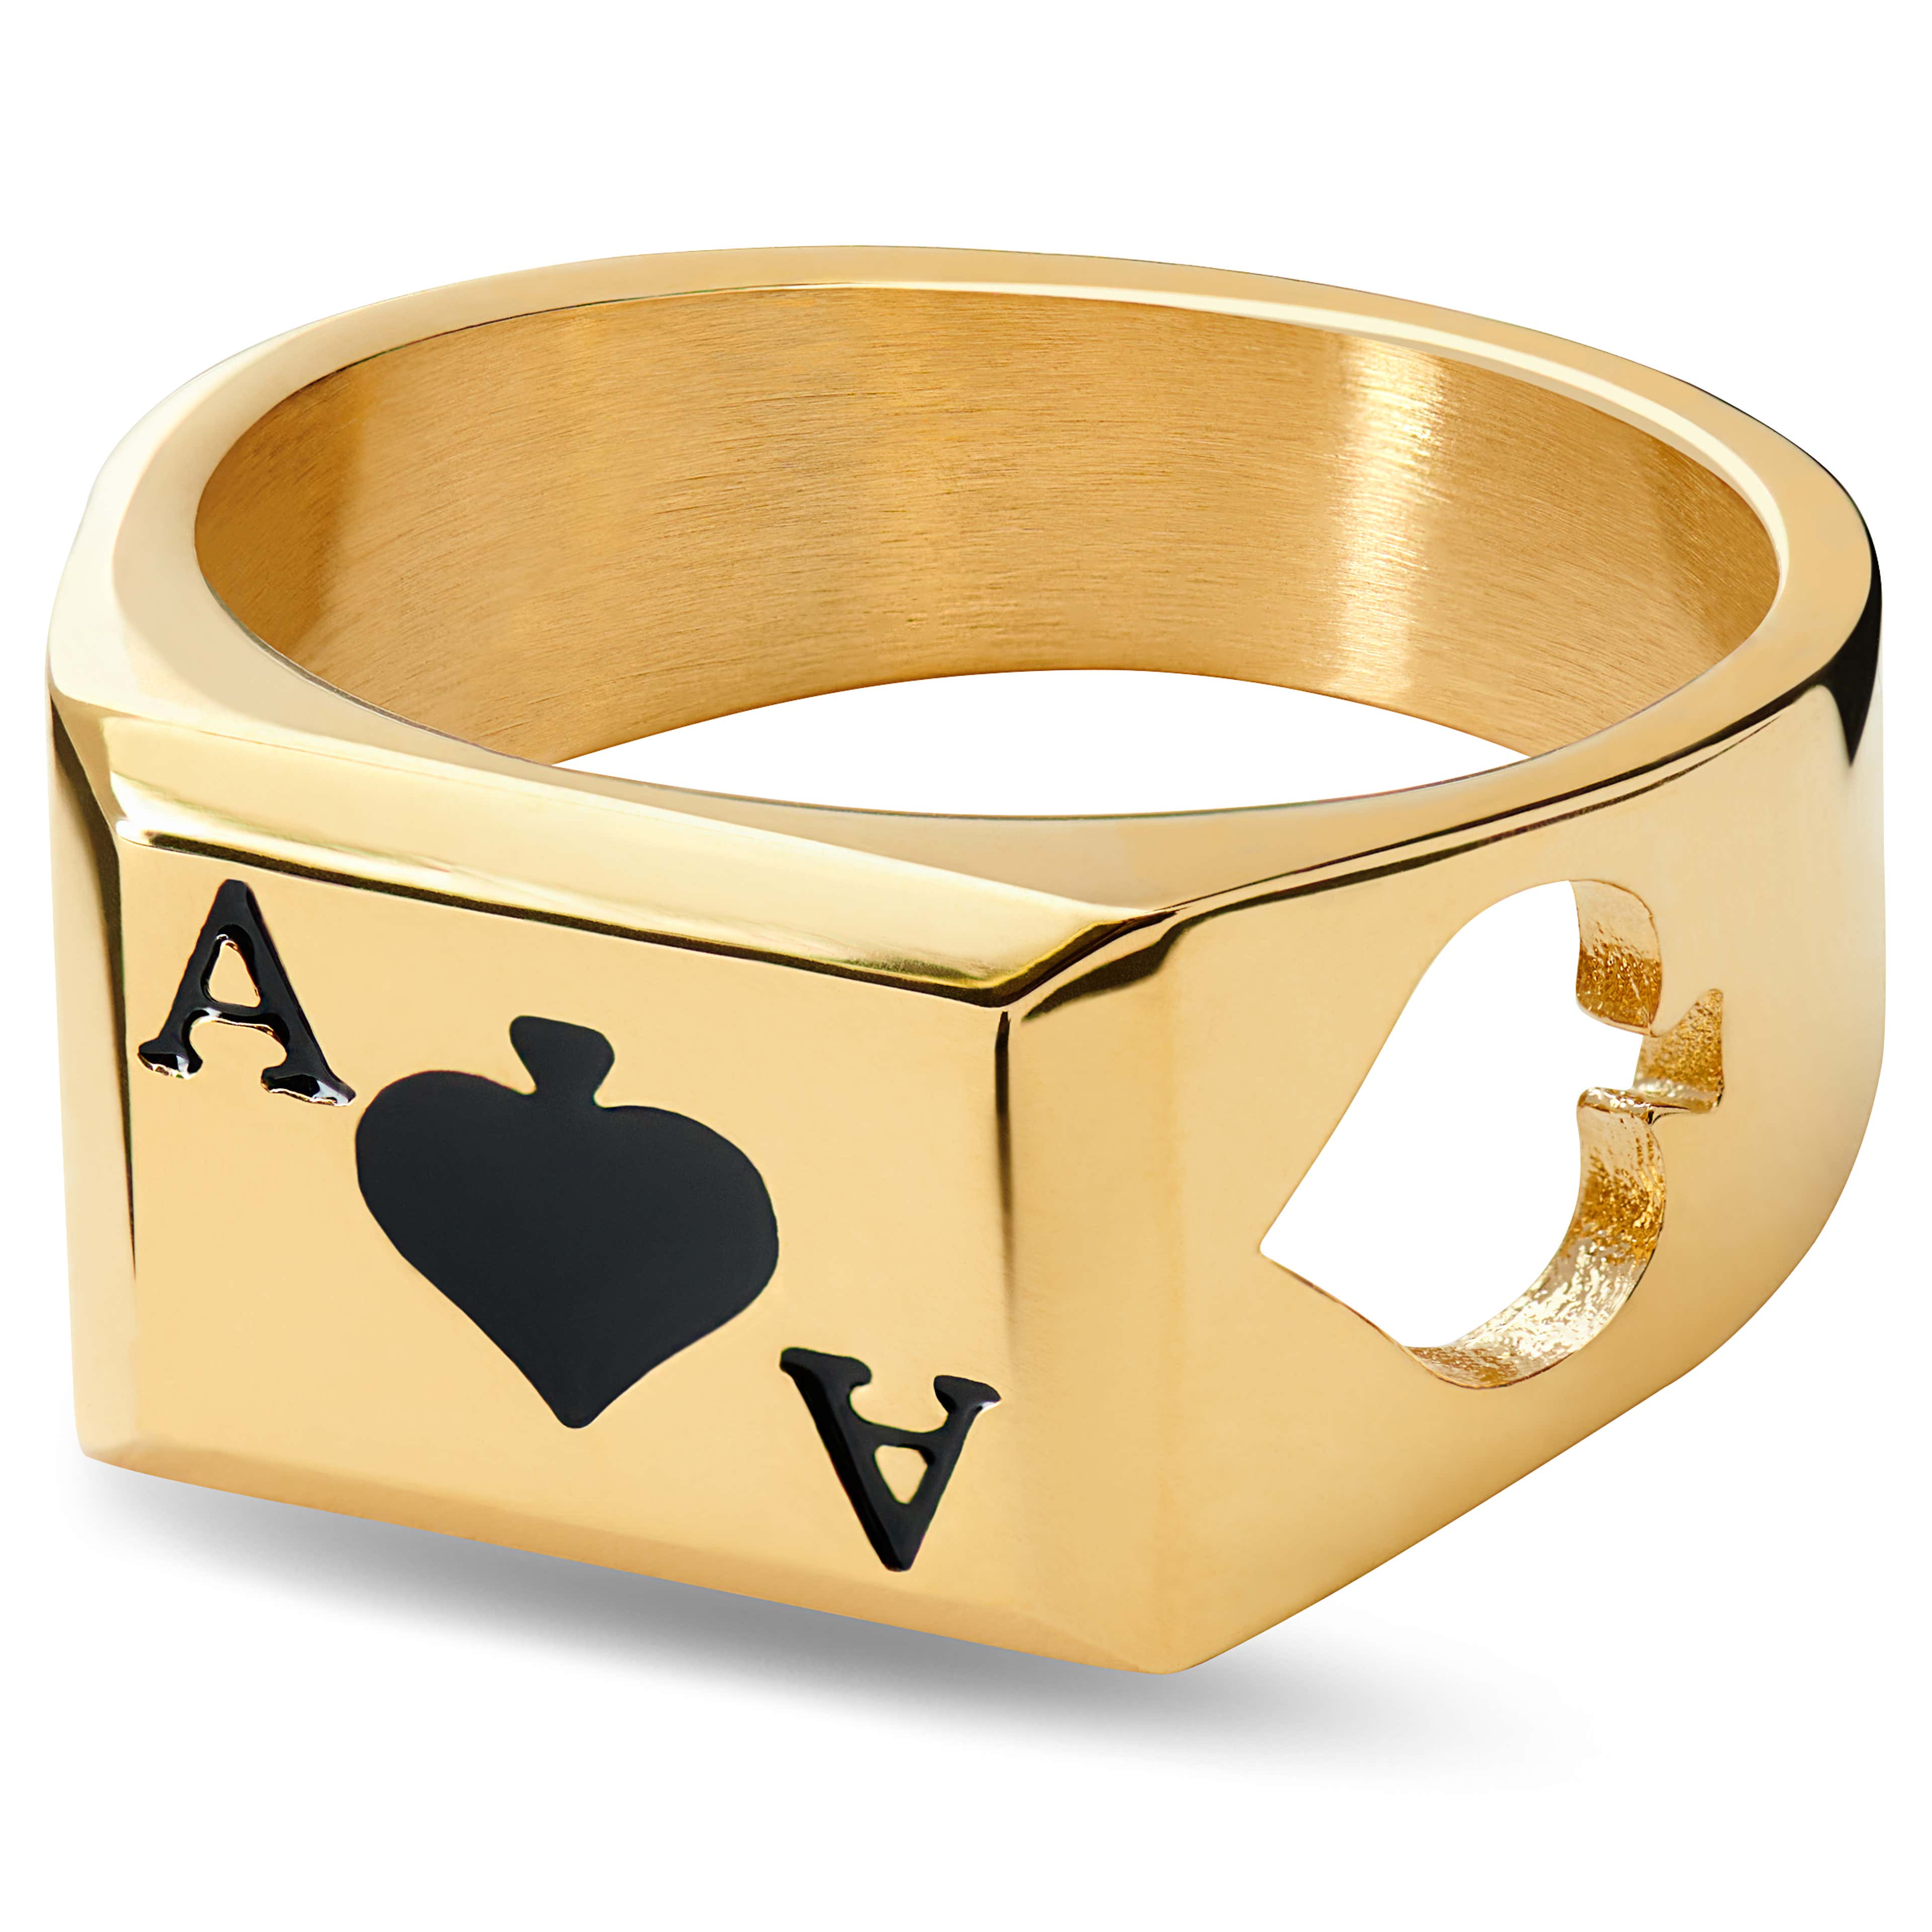 Ace | Gulltonet Ace of Spades Signetring